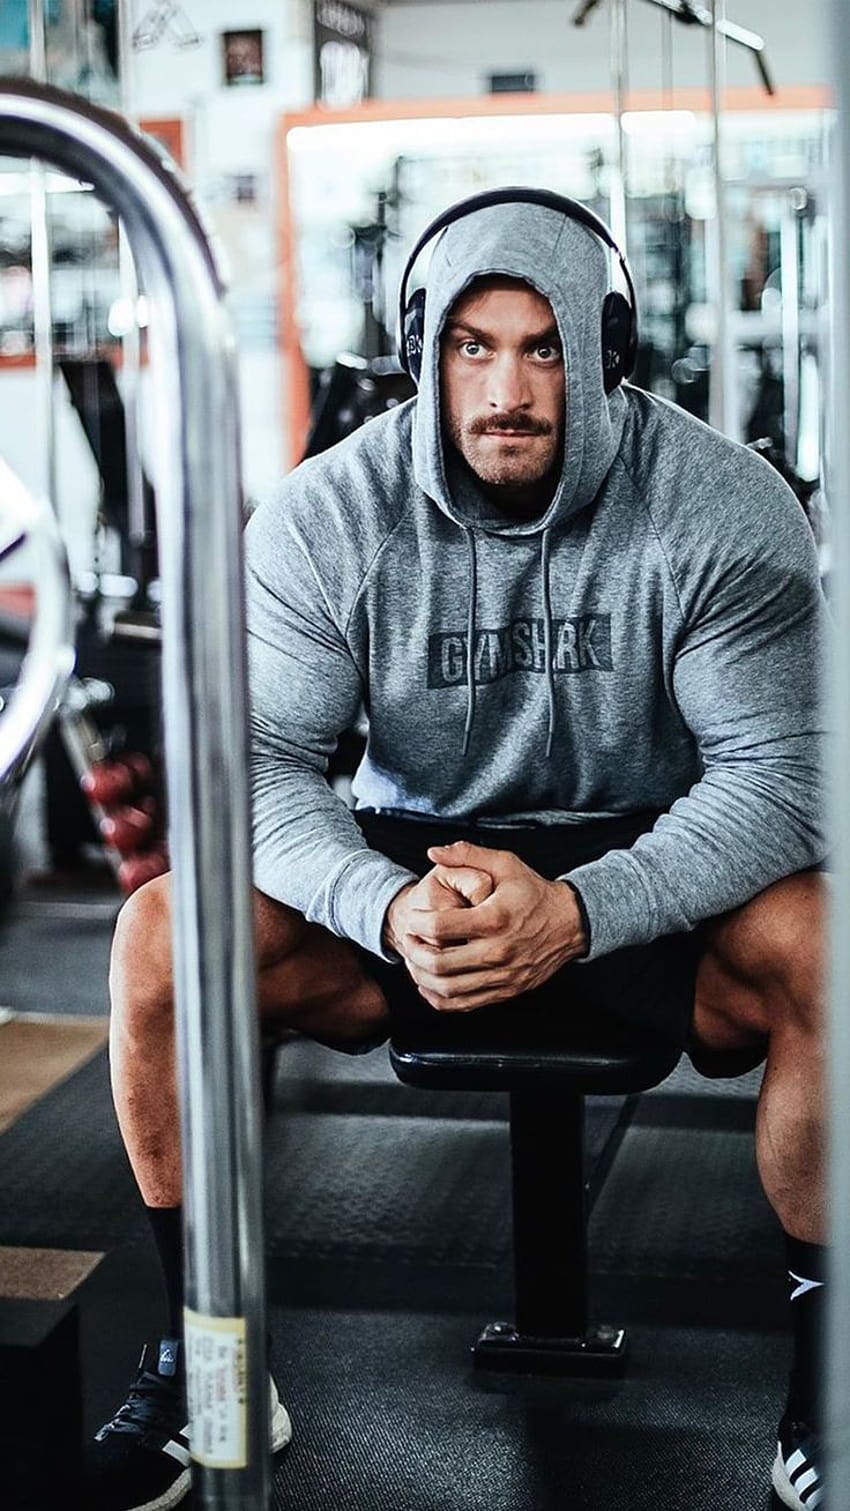 Why people wear hoodies in the gym?, by Ren Bucanegg